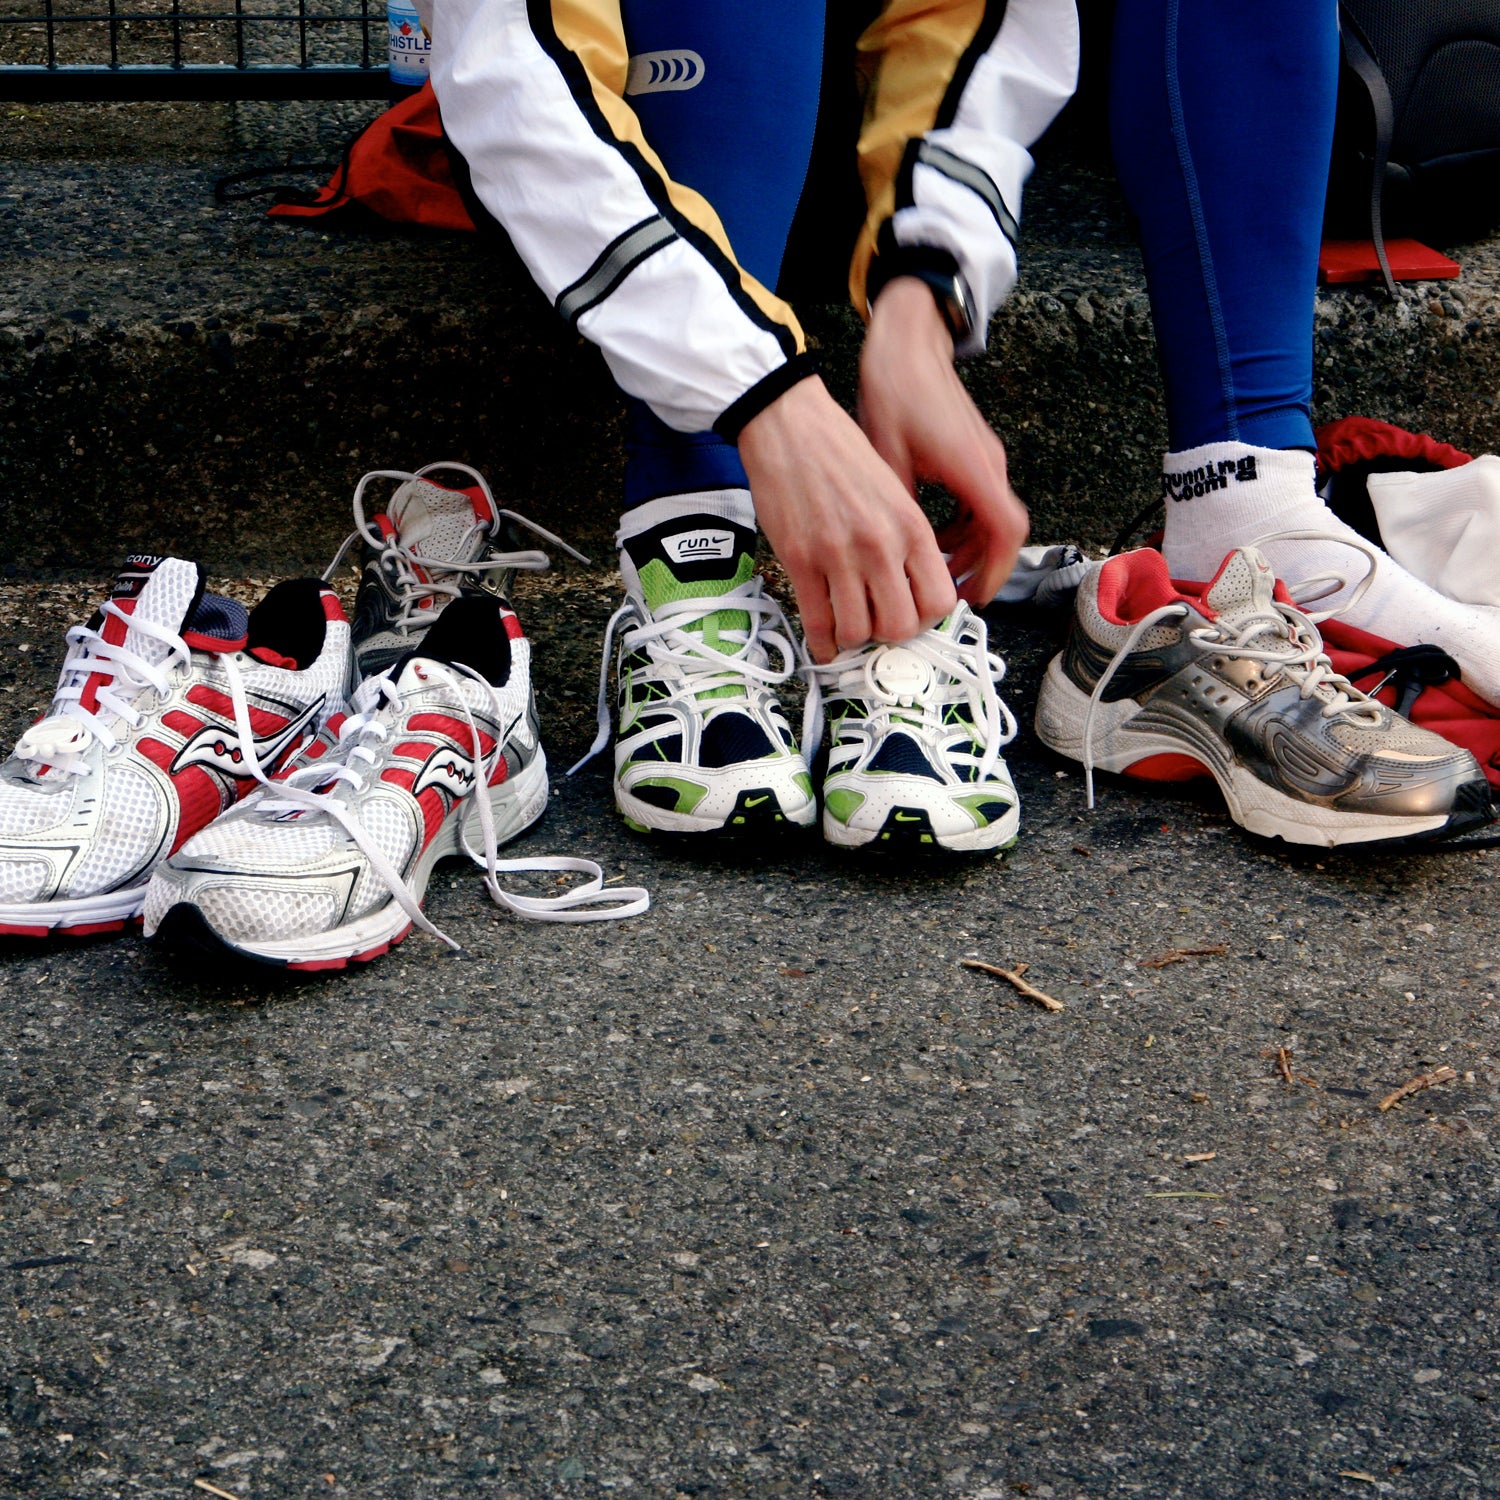 When Should You Use Elastic Shoelaces? – Triathlete